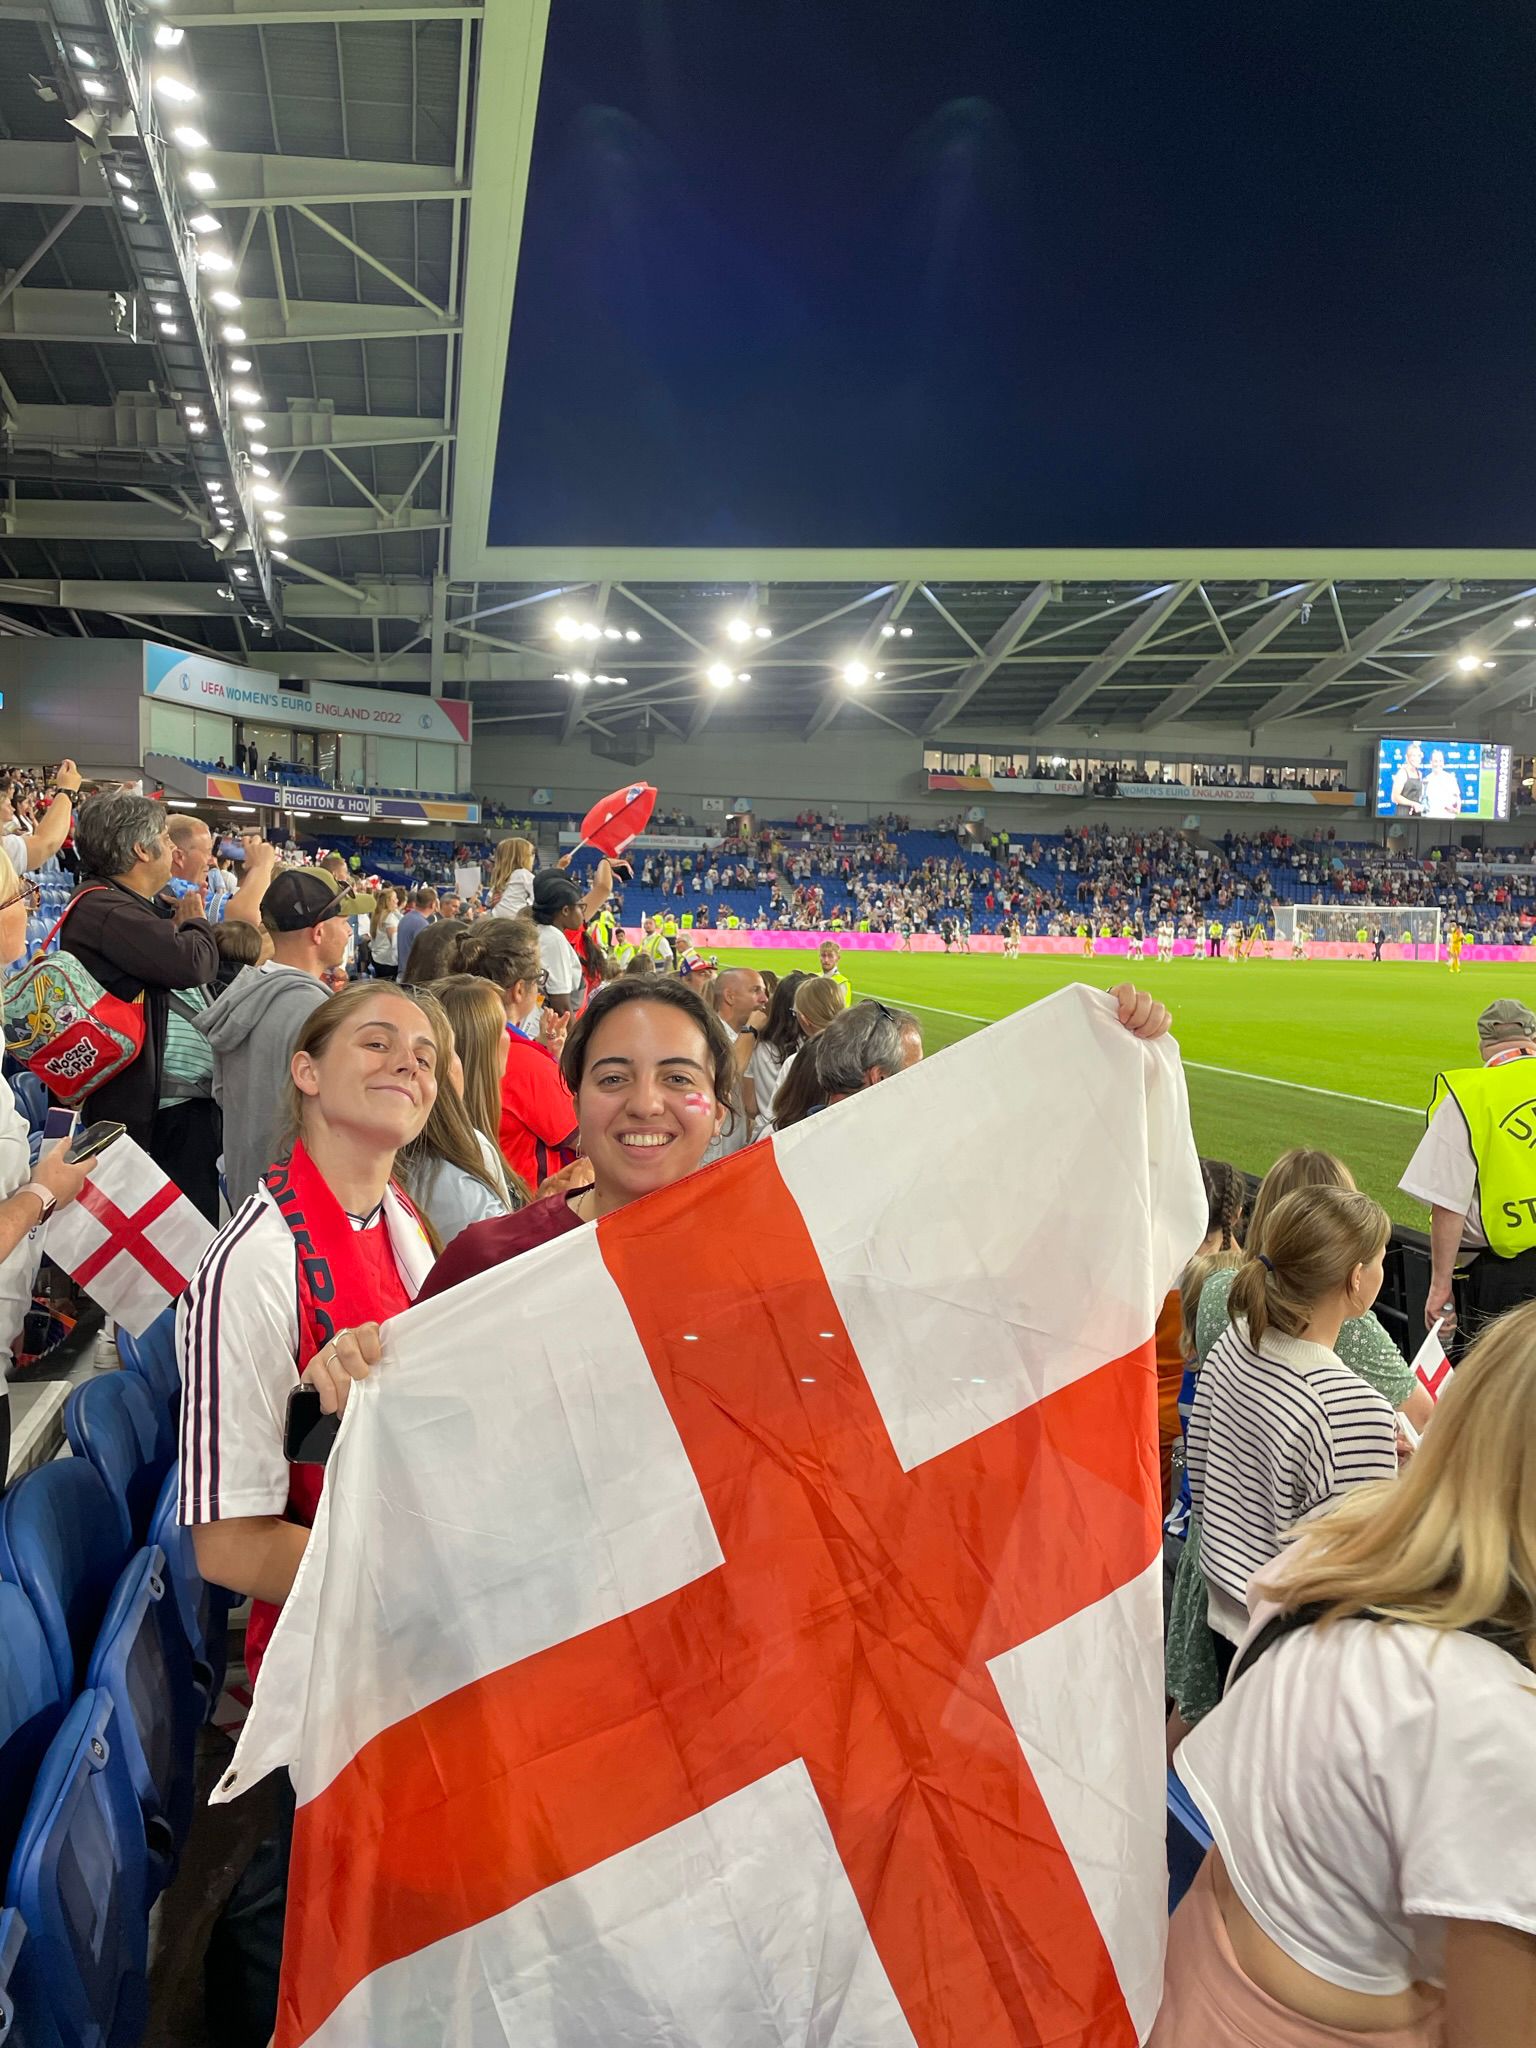 Layana Sasieddine holding an England flag during a football match in the Euros 